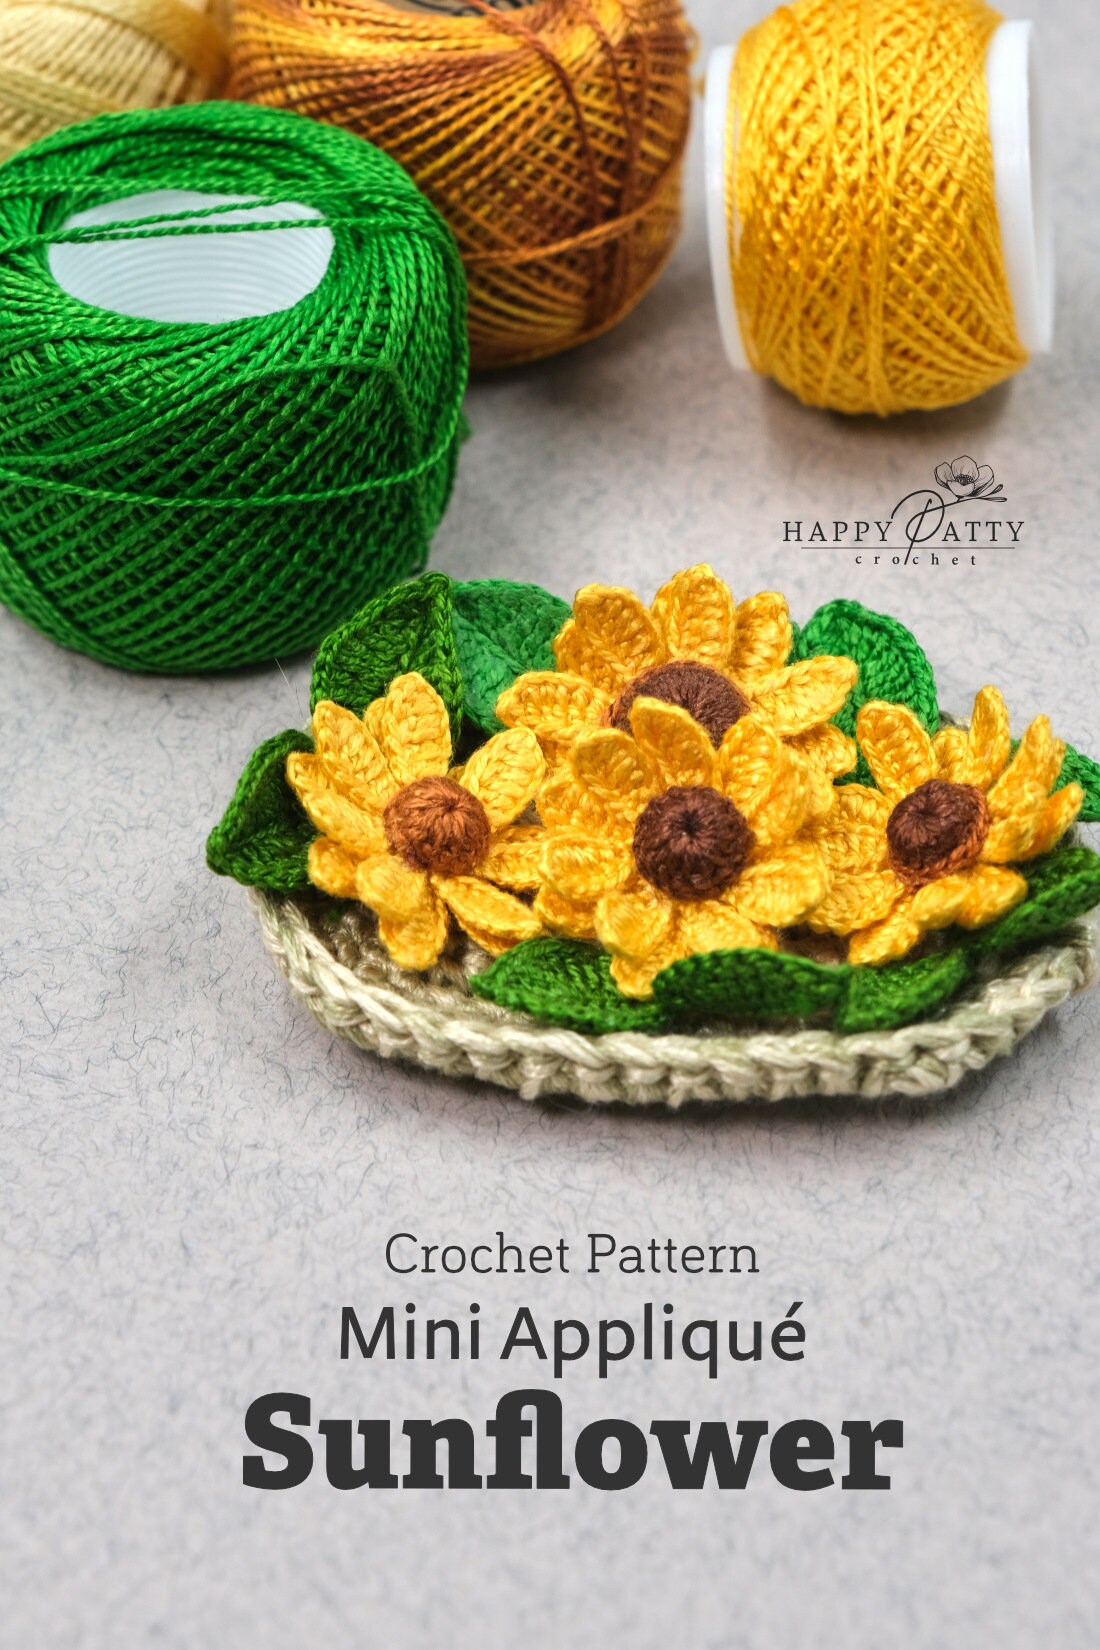 Crochet Mini Sunflower Applique Pattern - Crochet Flower Pattern for a Miniature Sunflower Applique - Crochet Sunflower Pattern